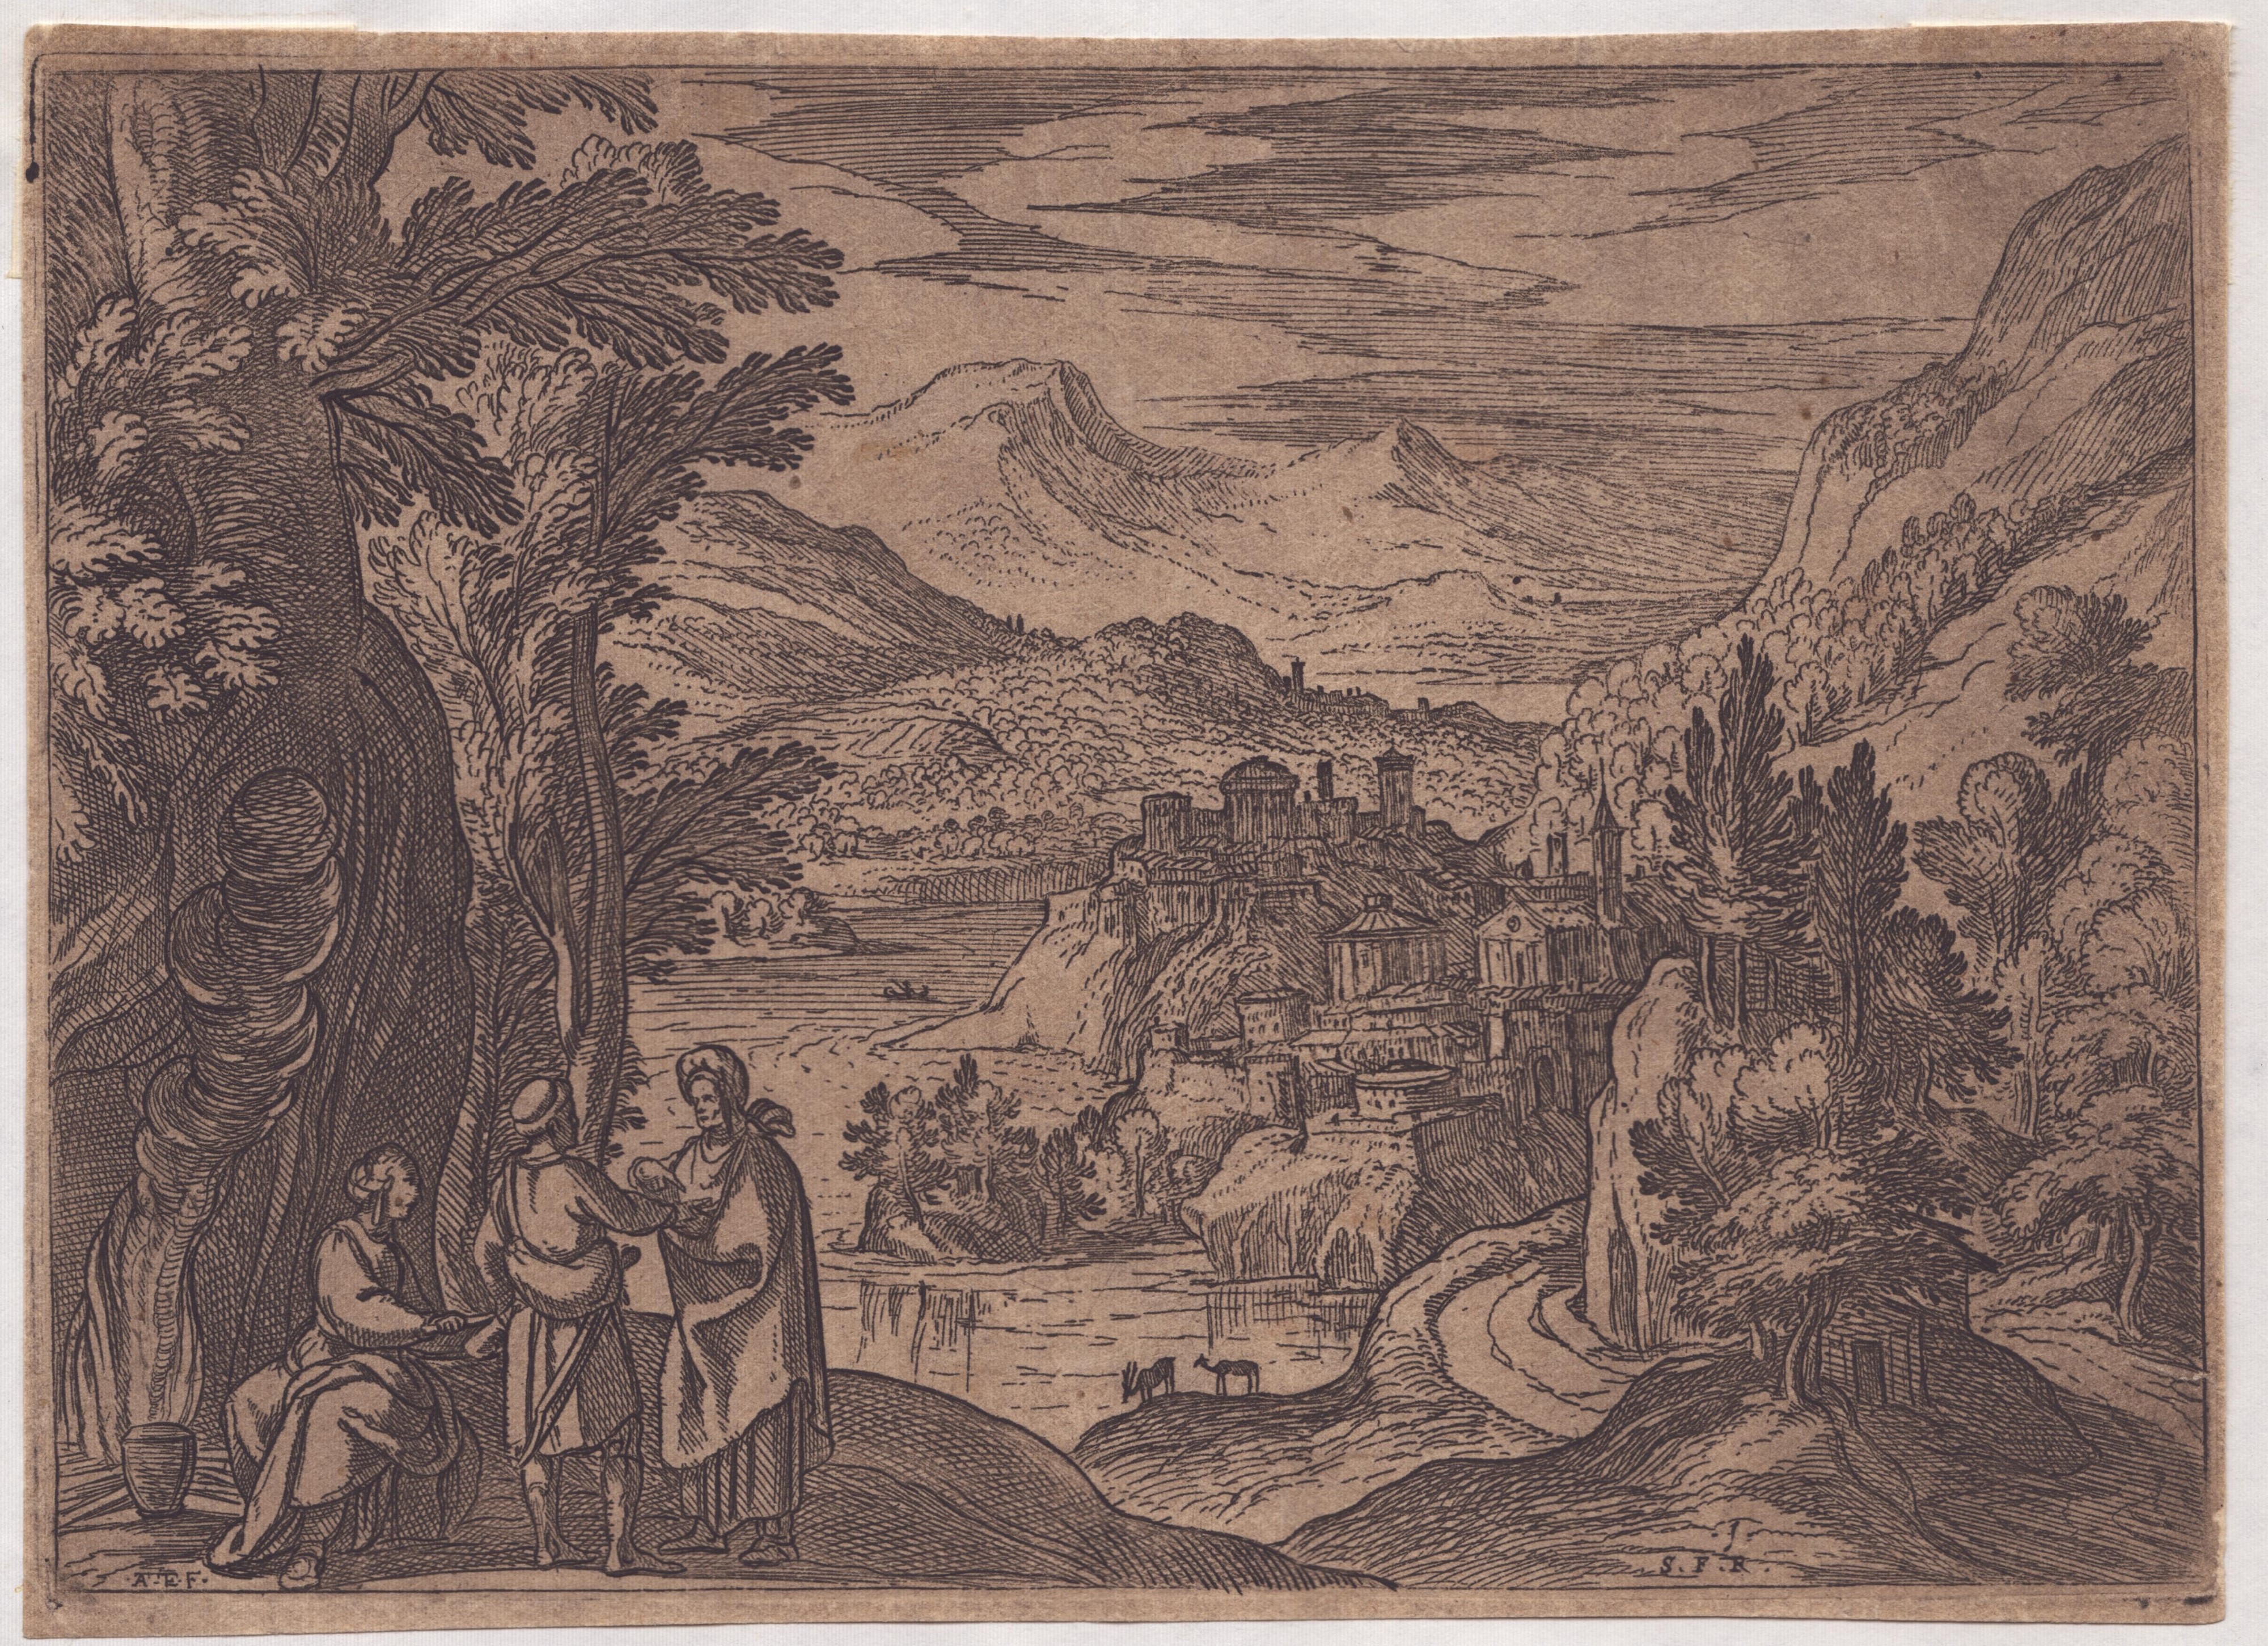 Landscape with figures by Antonio Tempesta, 1172